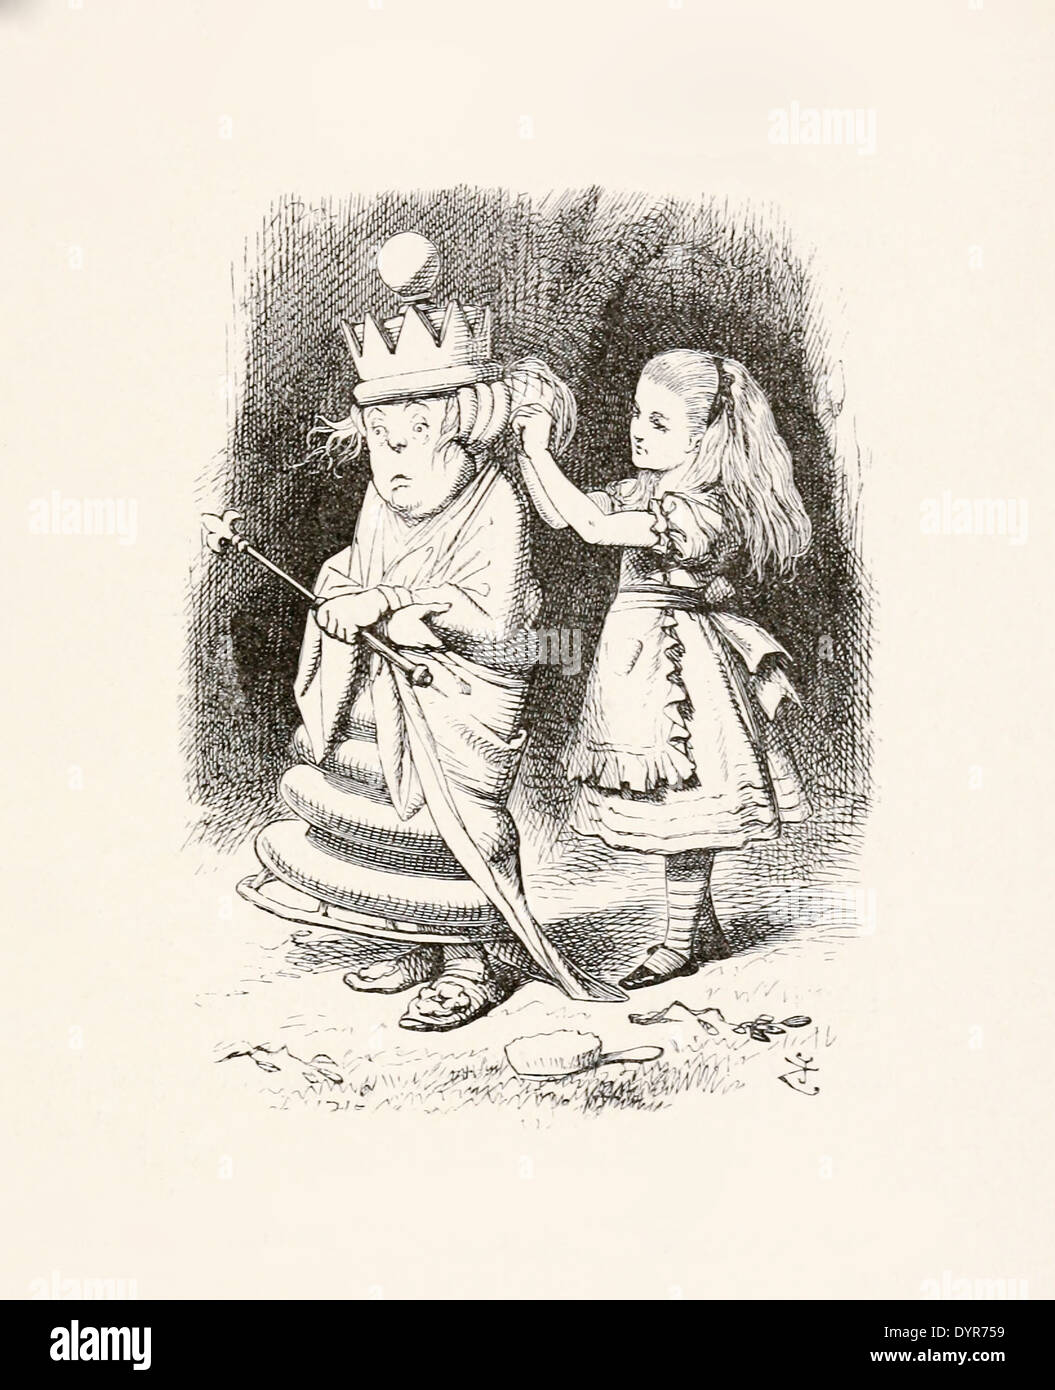 https://c8.alamy.com/comp/DYR759/john-tenniel-1820-1914-illustration-from-lewis-carrolls-through-the-DYR759.jpg